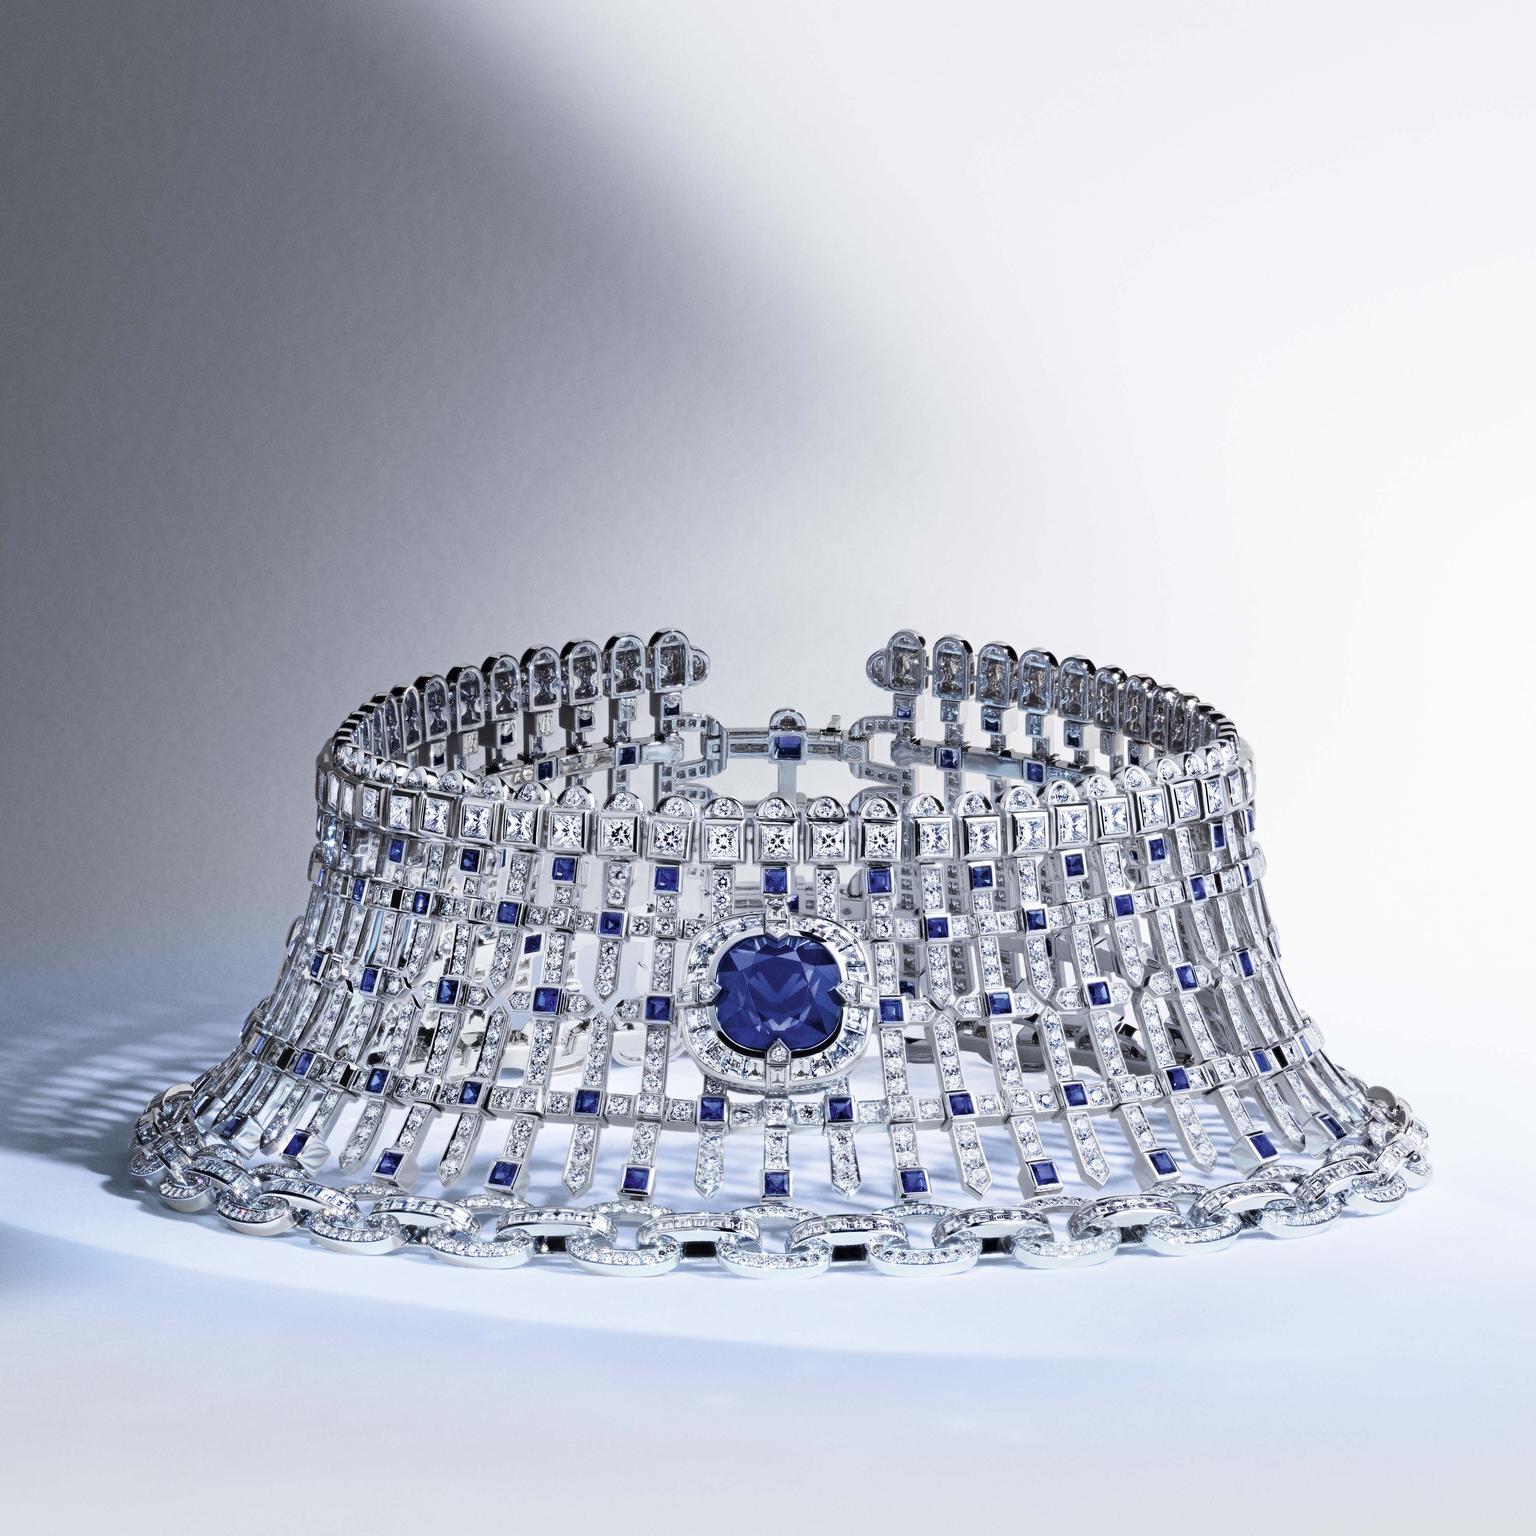 Louis Vuitton Bravery High Jewellery celebrates 200 years of brilliance